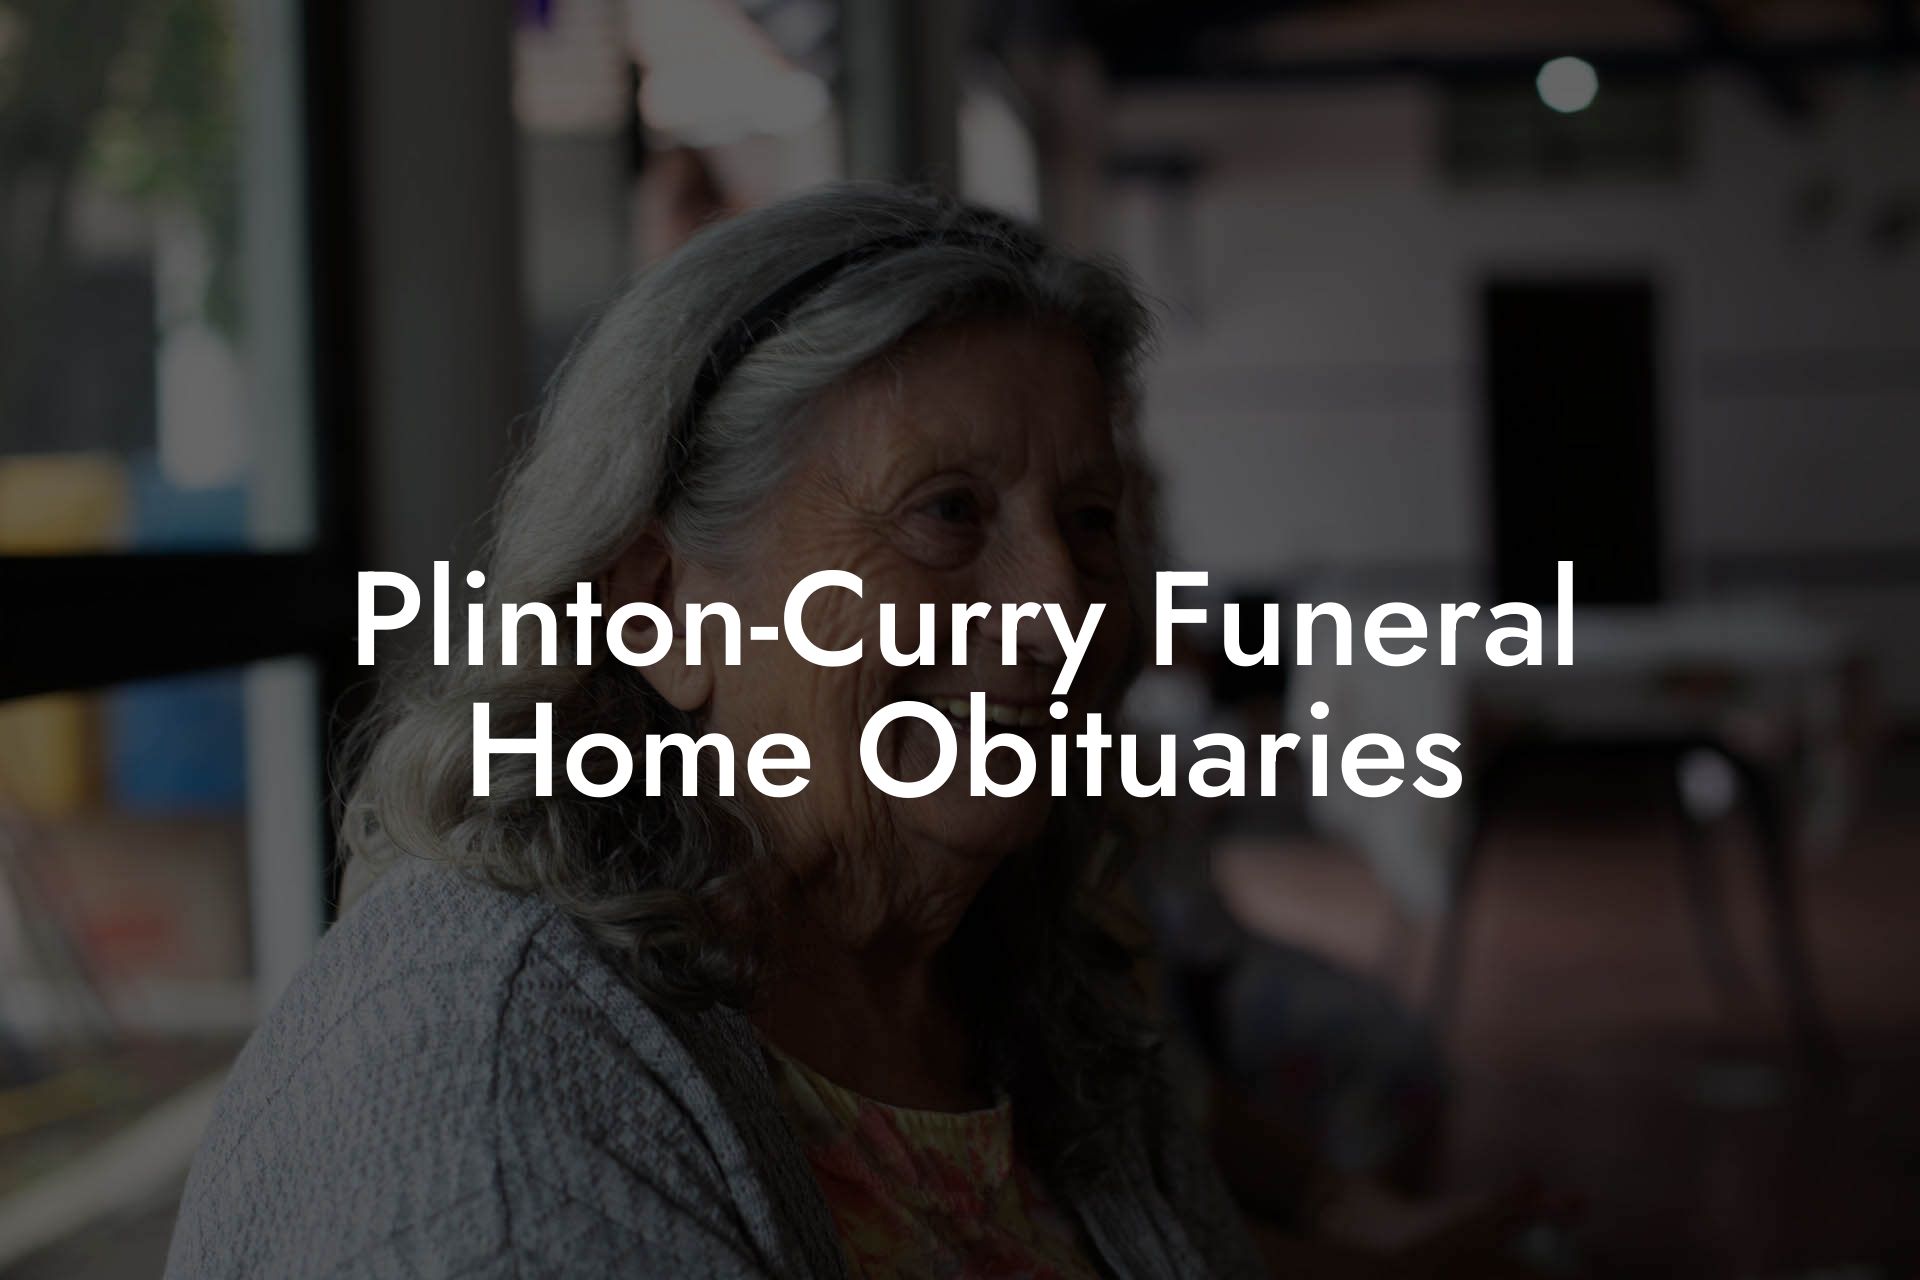 Plinton-Curry Funeral Home Obituaries